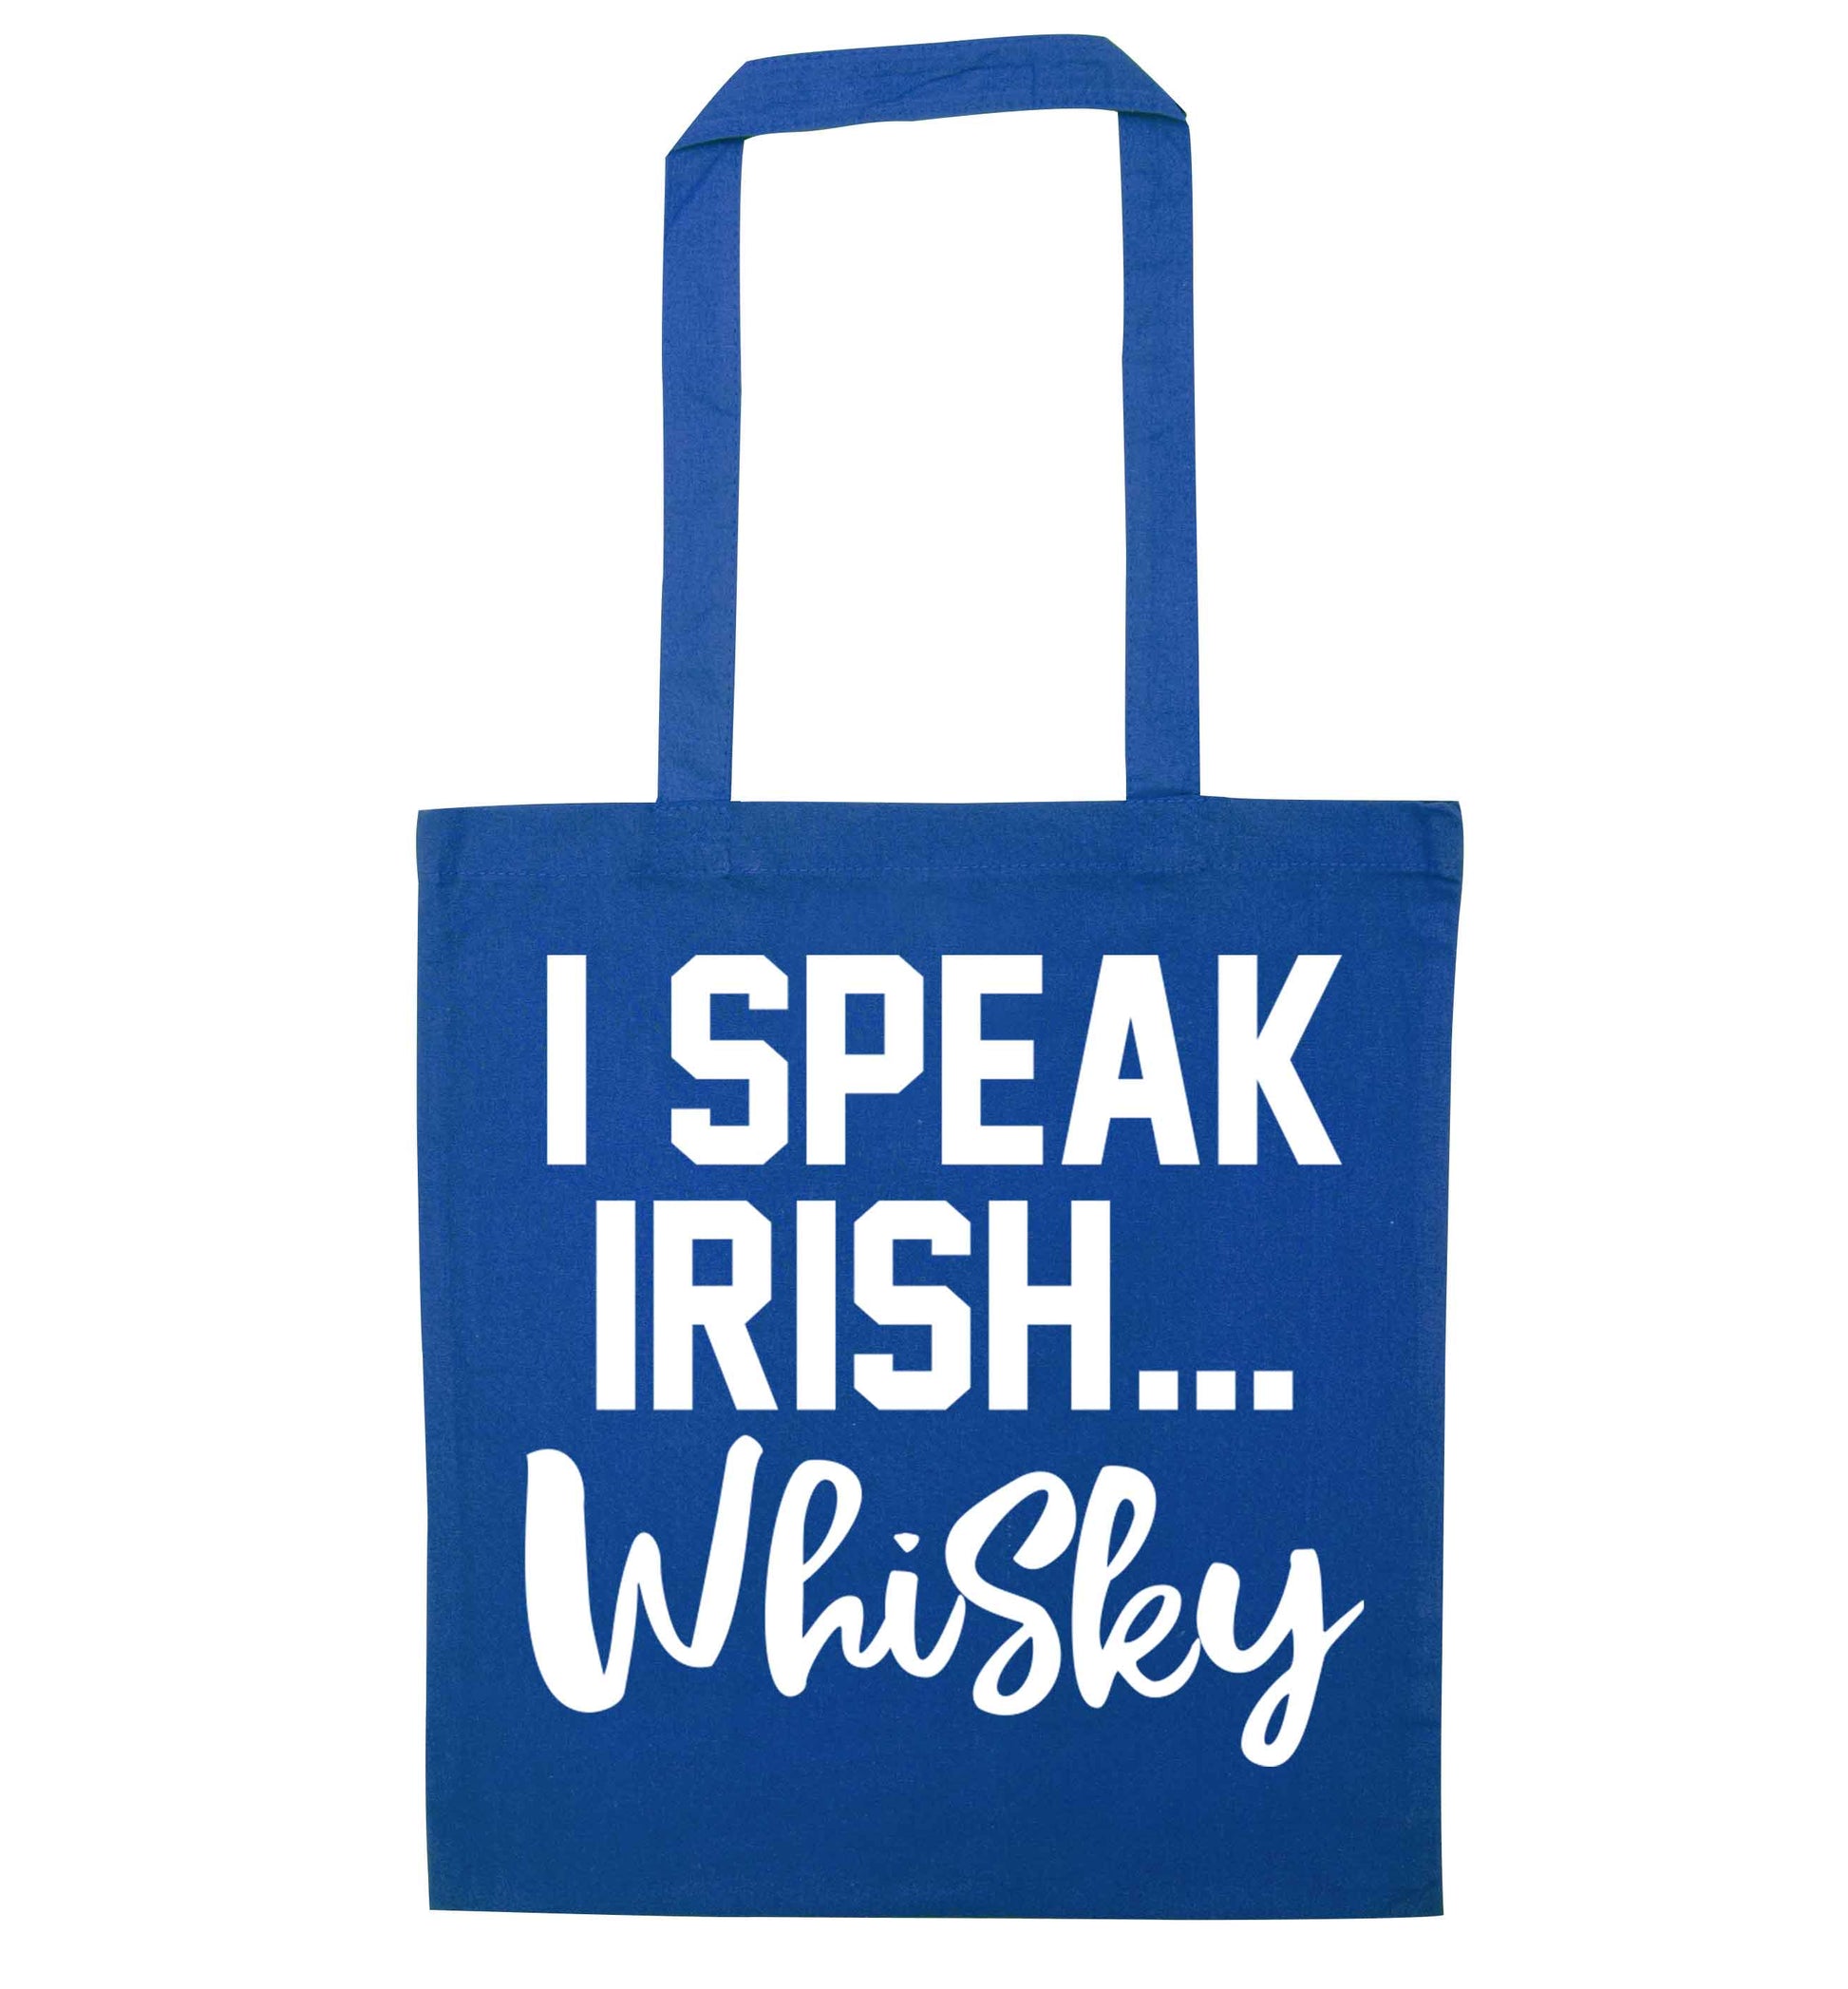 I speak Irish whisky blue tote bag